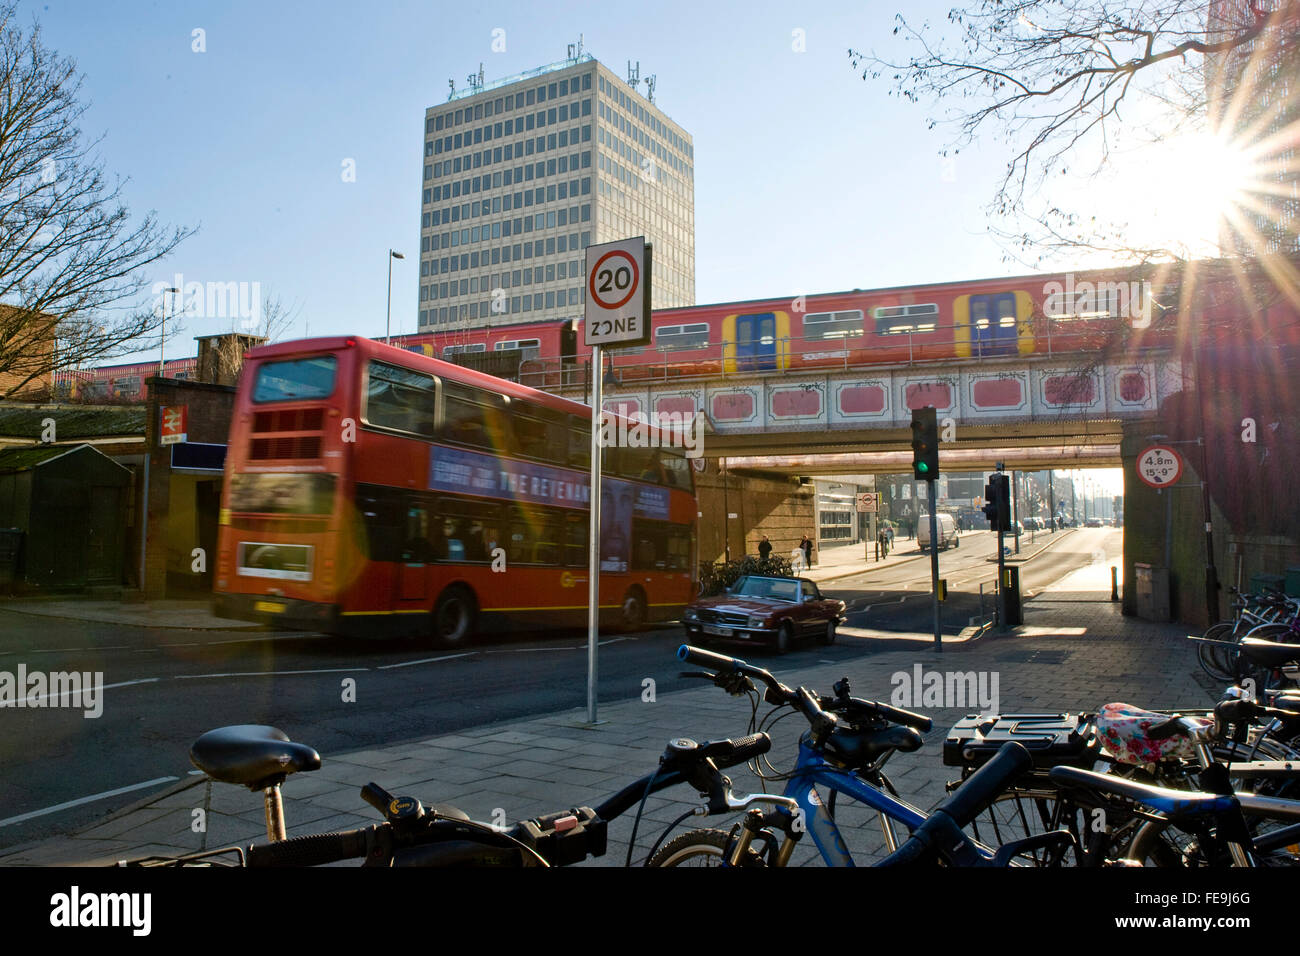 Bus, Car, Train and bike London transport Stock Photo